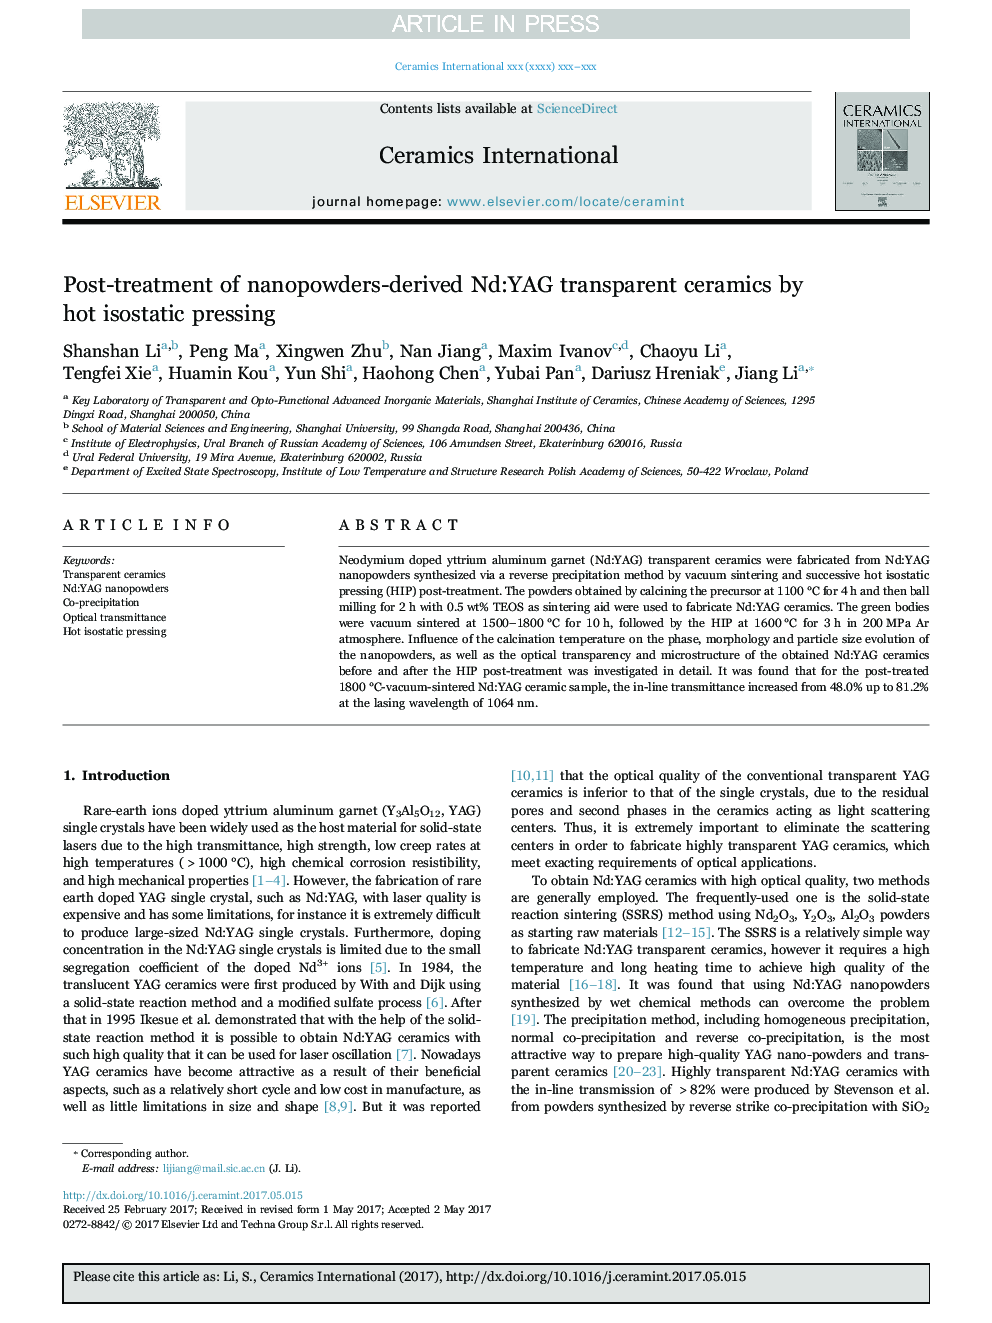 Post-treatment of nanopowders-derived Nd:YAG transparent ceramics by hot isostatic pressing